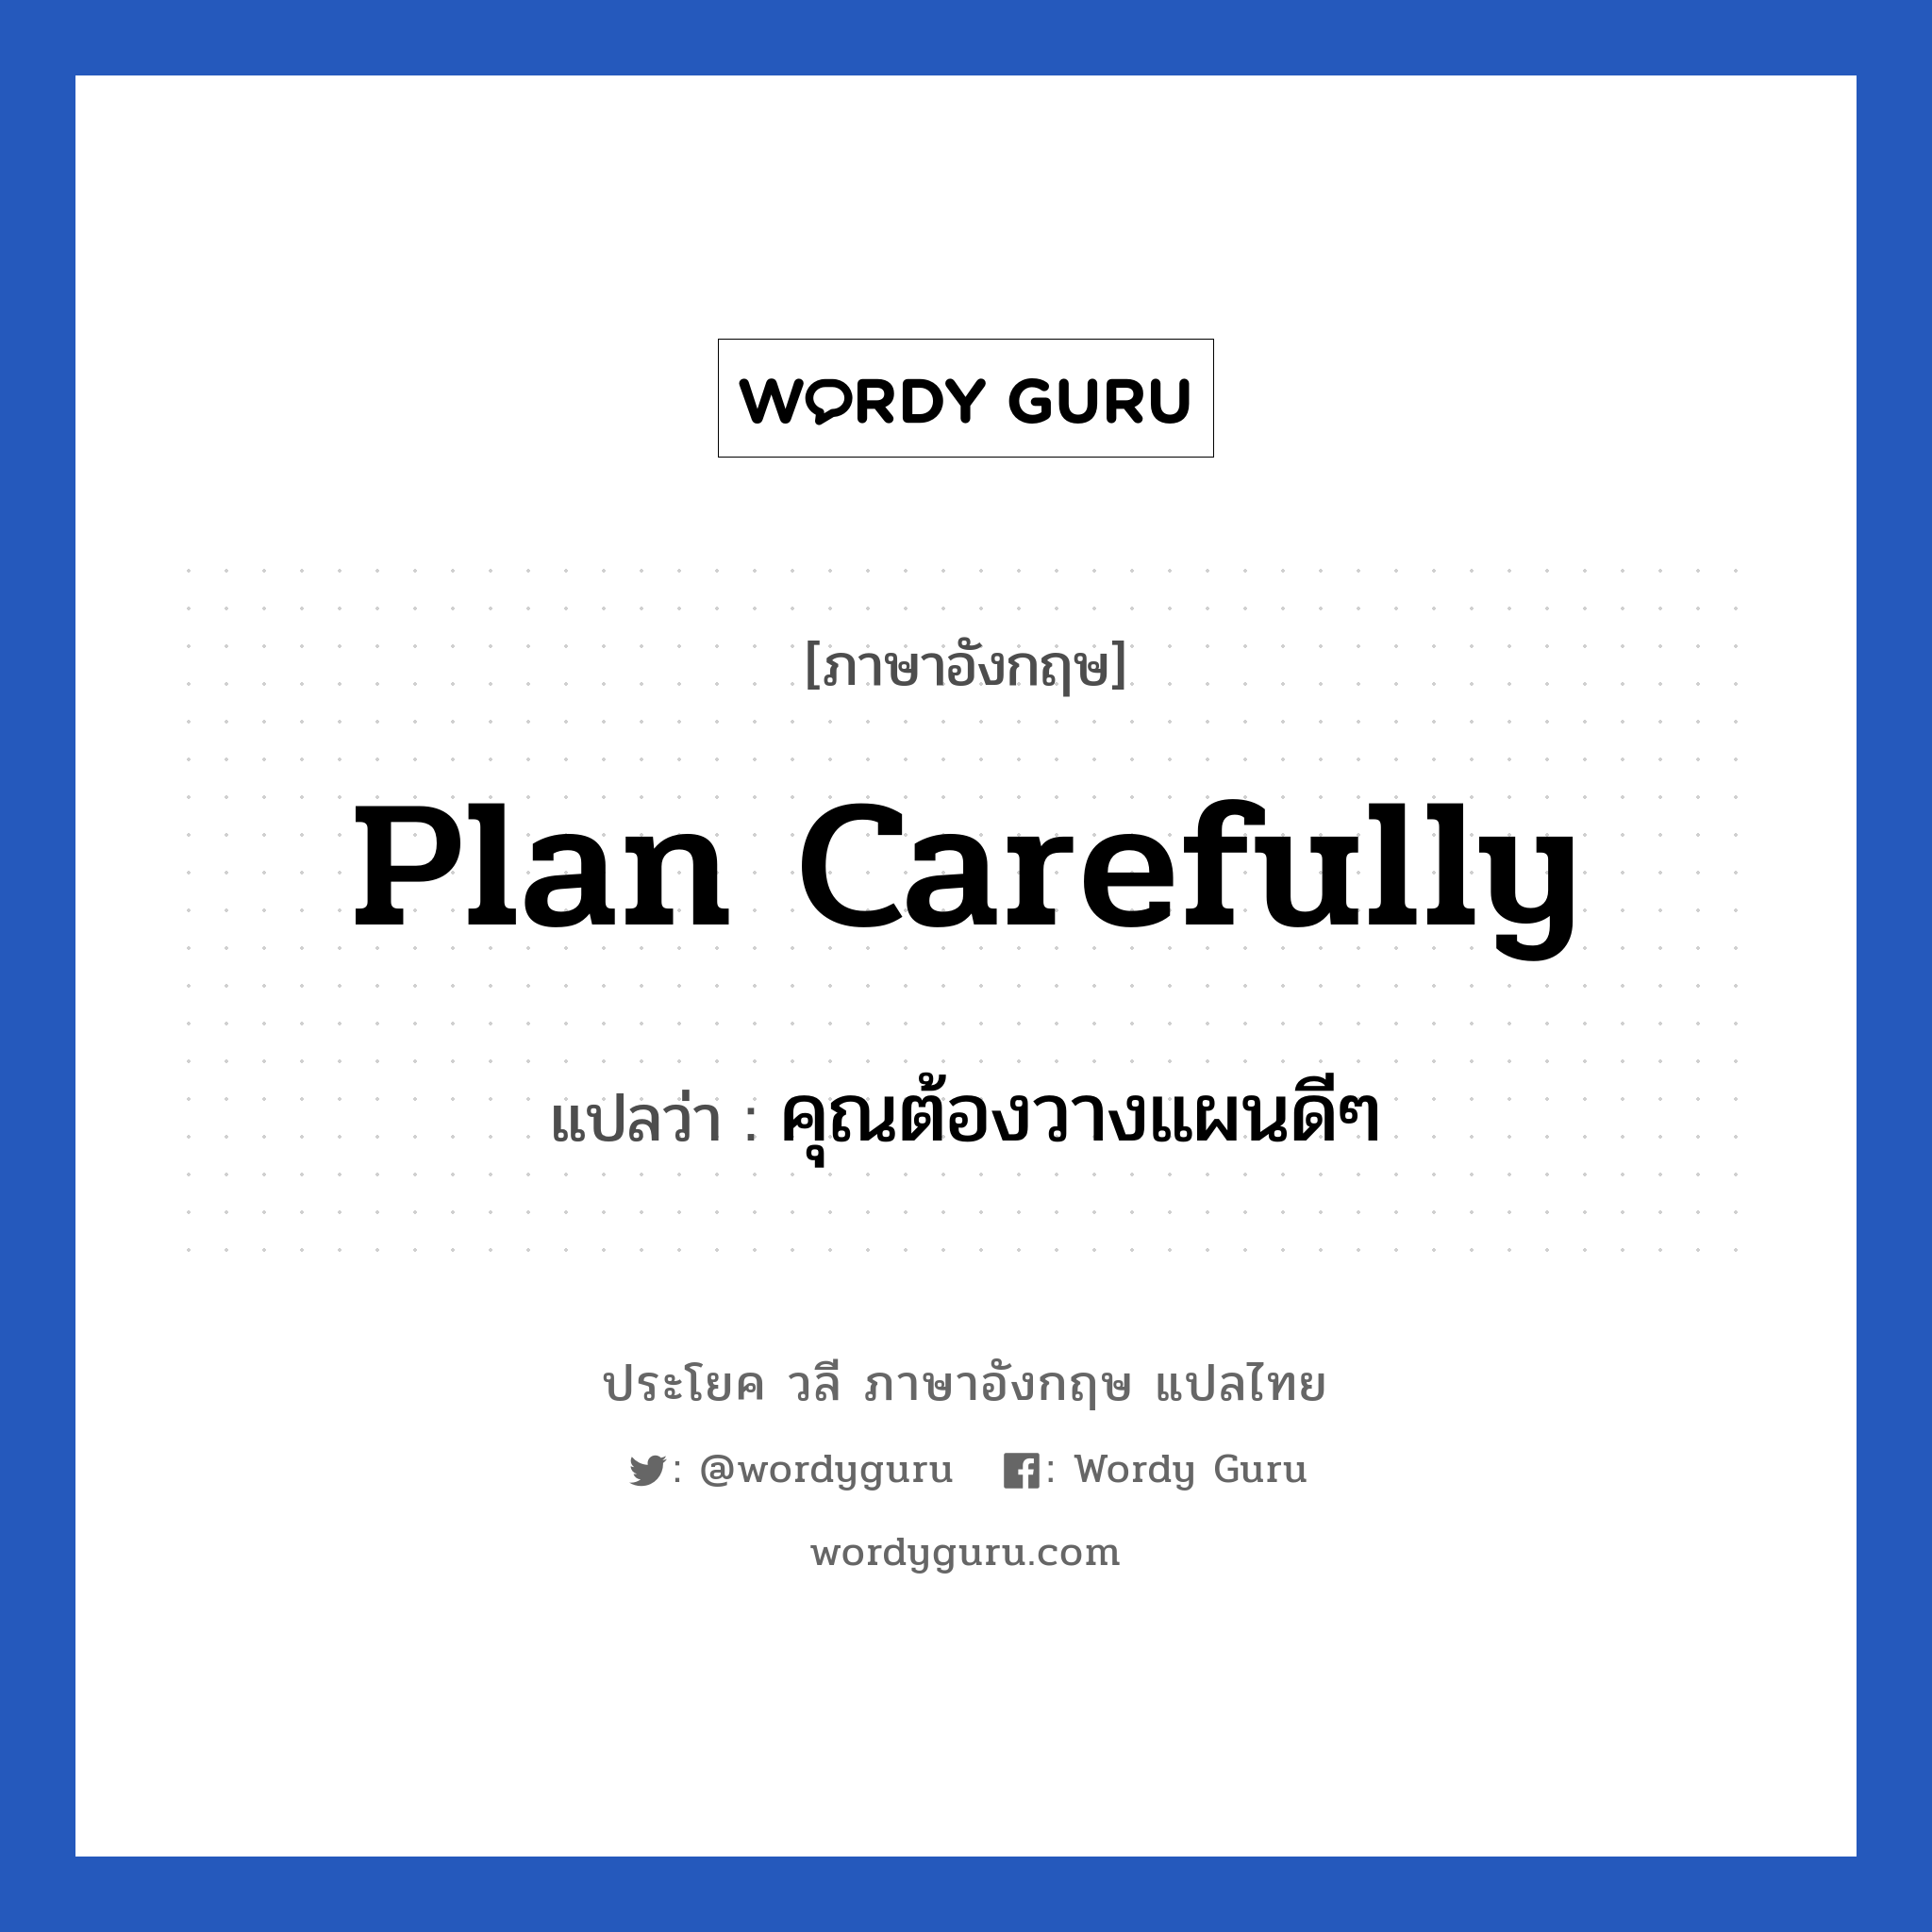 Plan carefully แปลว่า?, วลีภาษาอังกฤษ Plan carefully แปลว่า คุณต้องวางแผนดีๆ